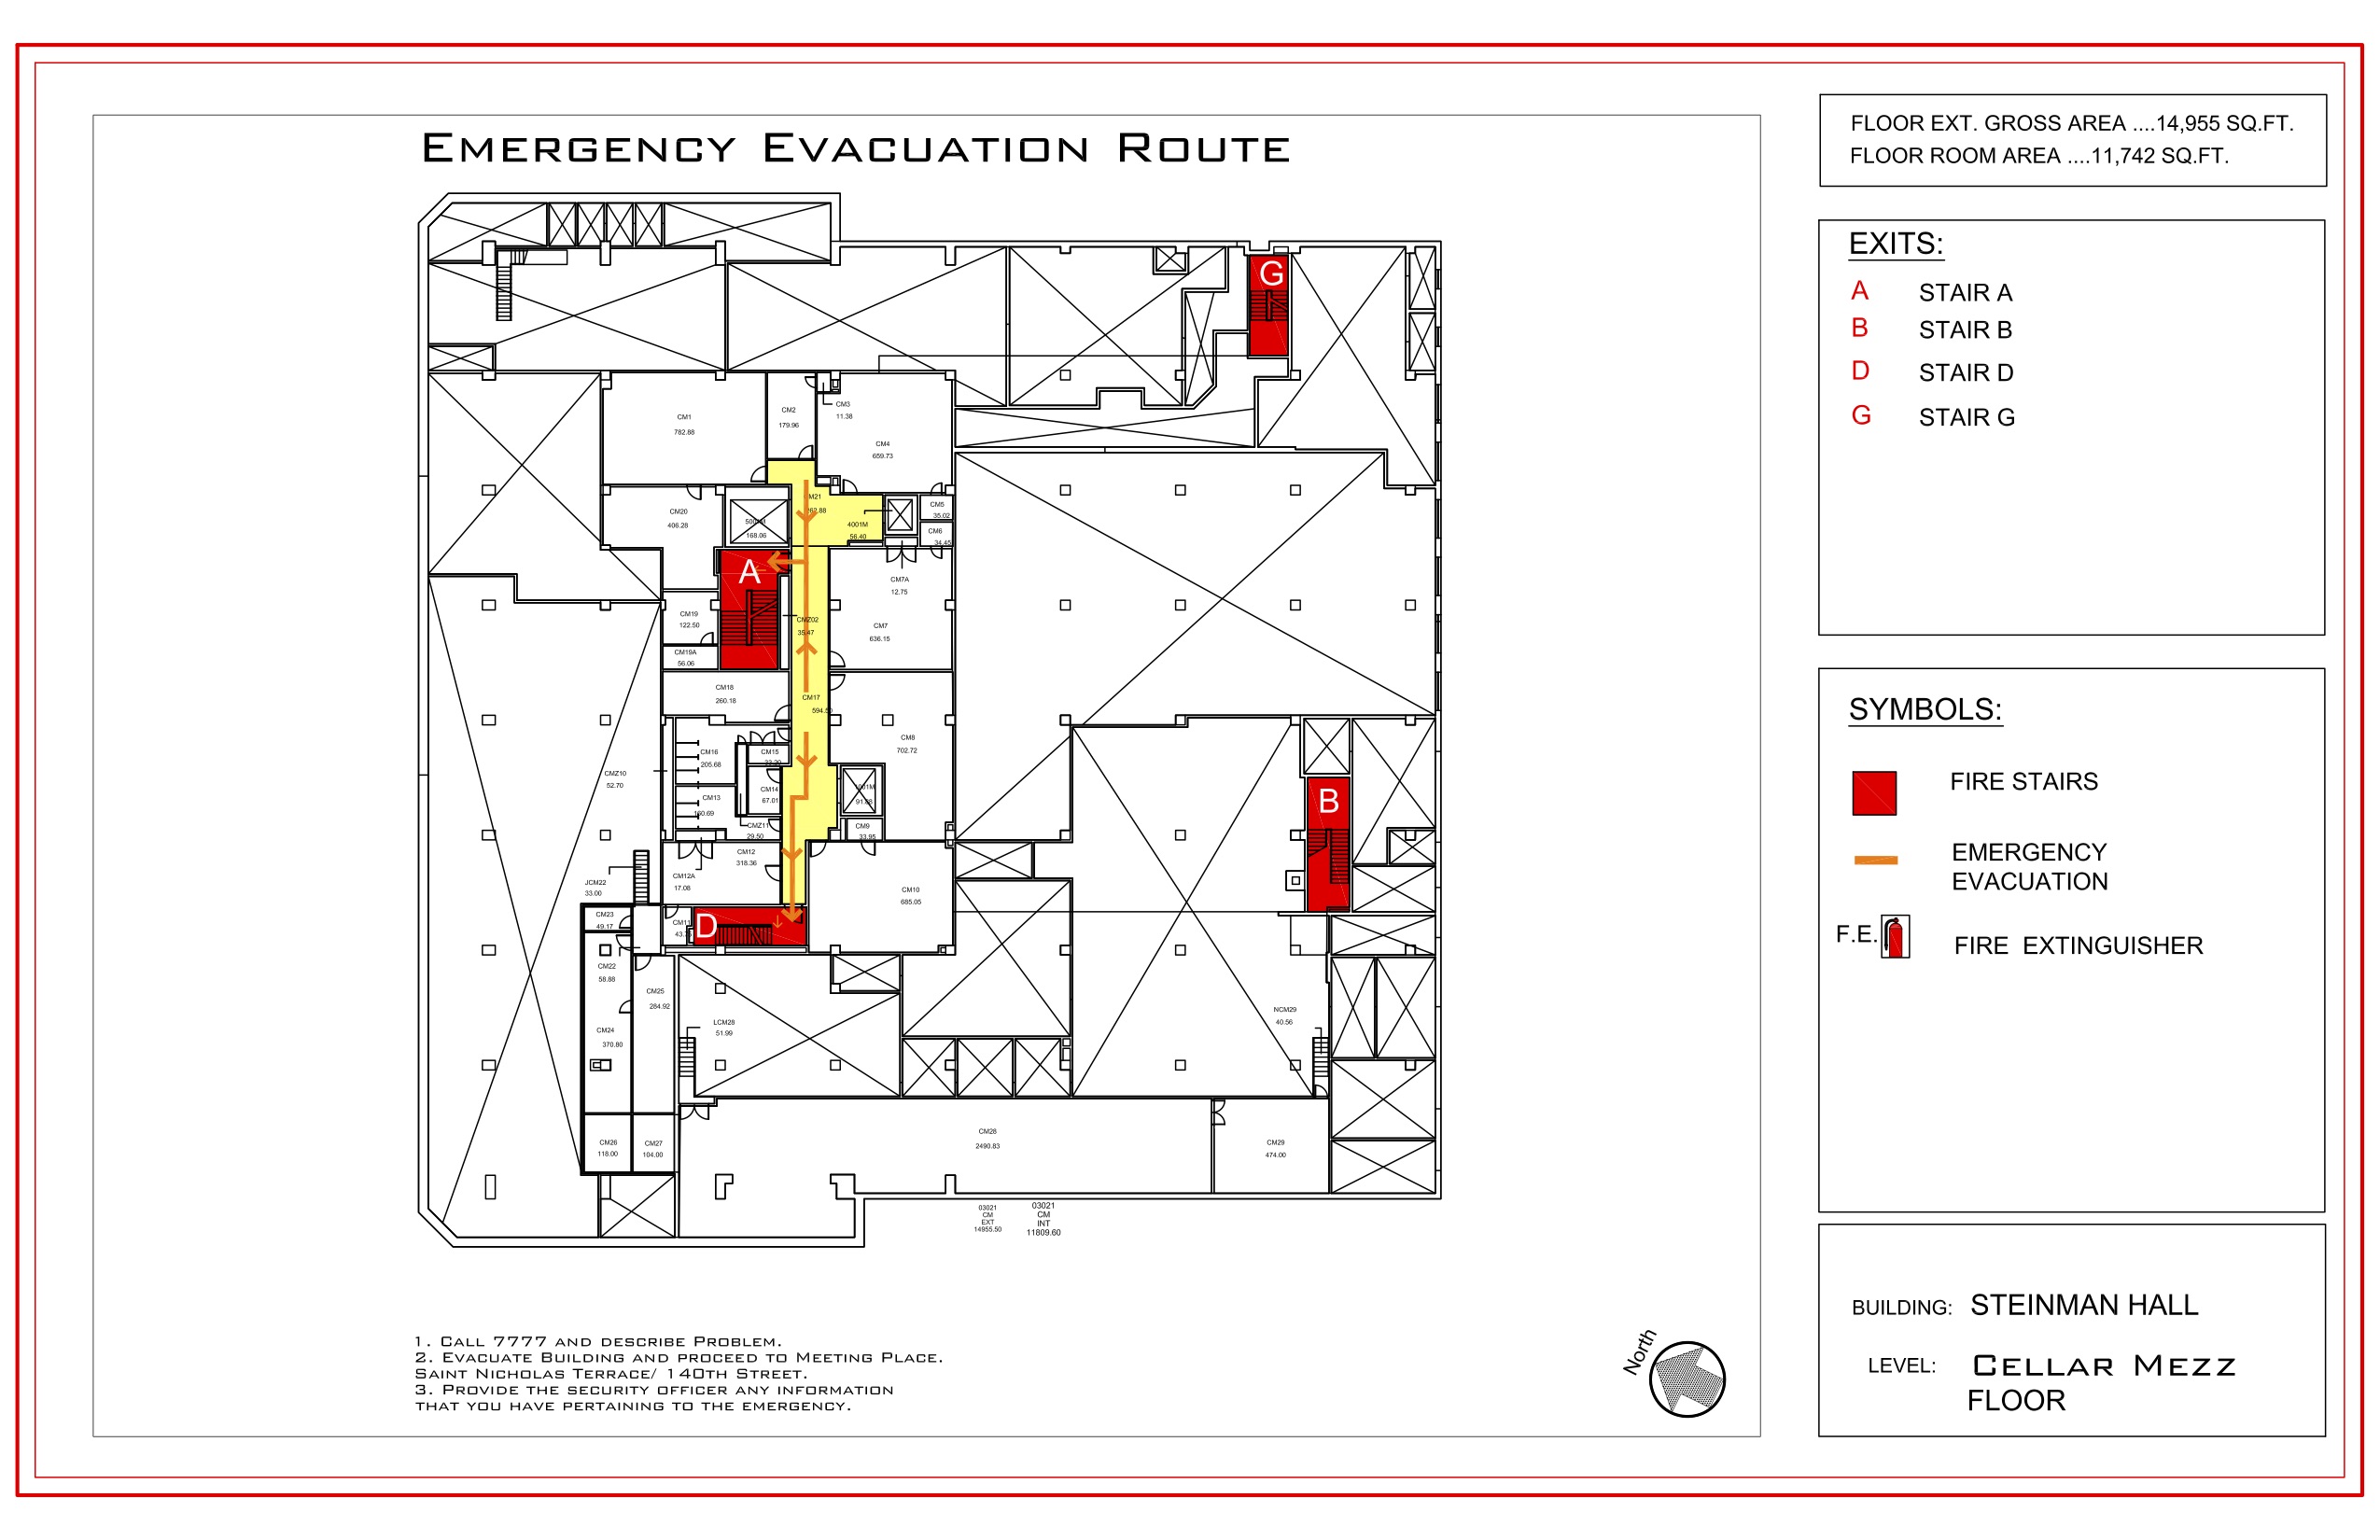 Steinman - Evacuation Route 1